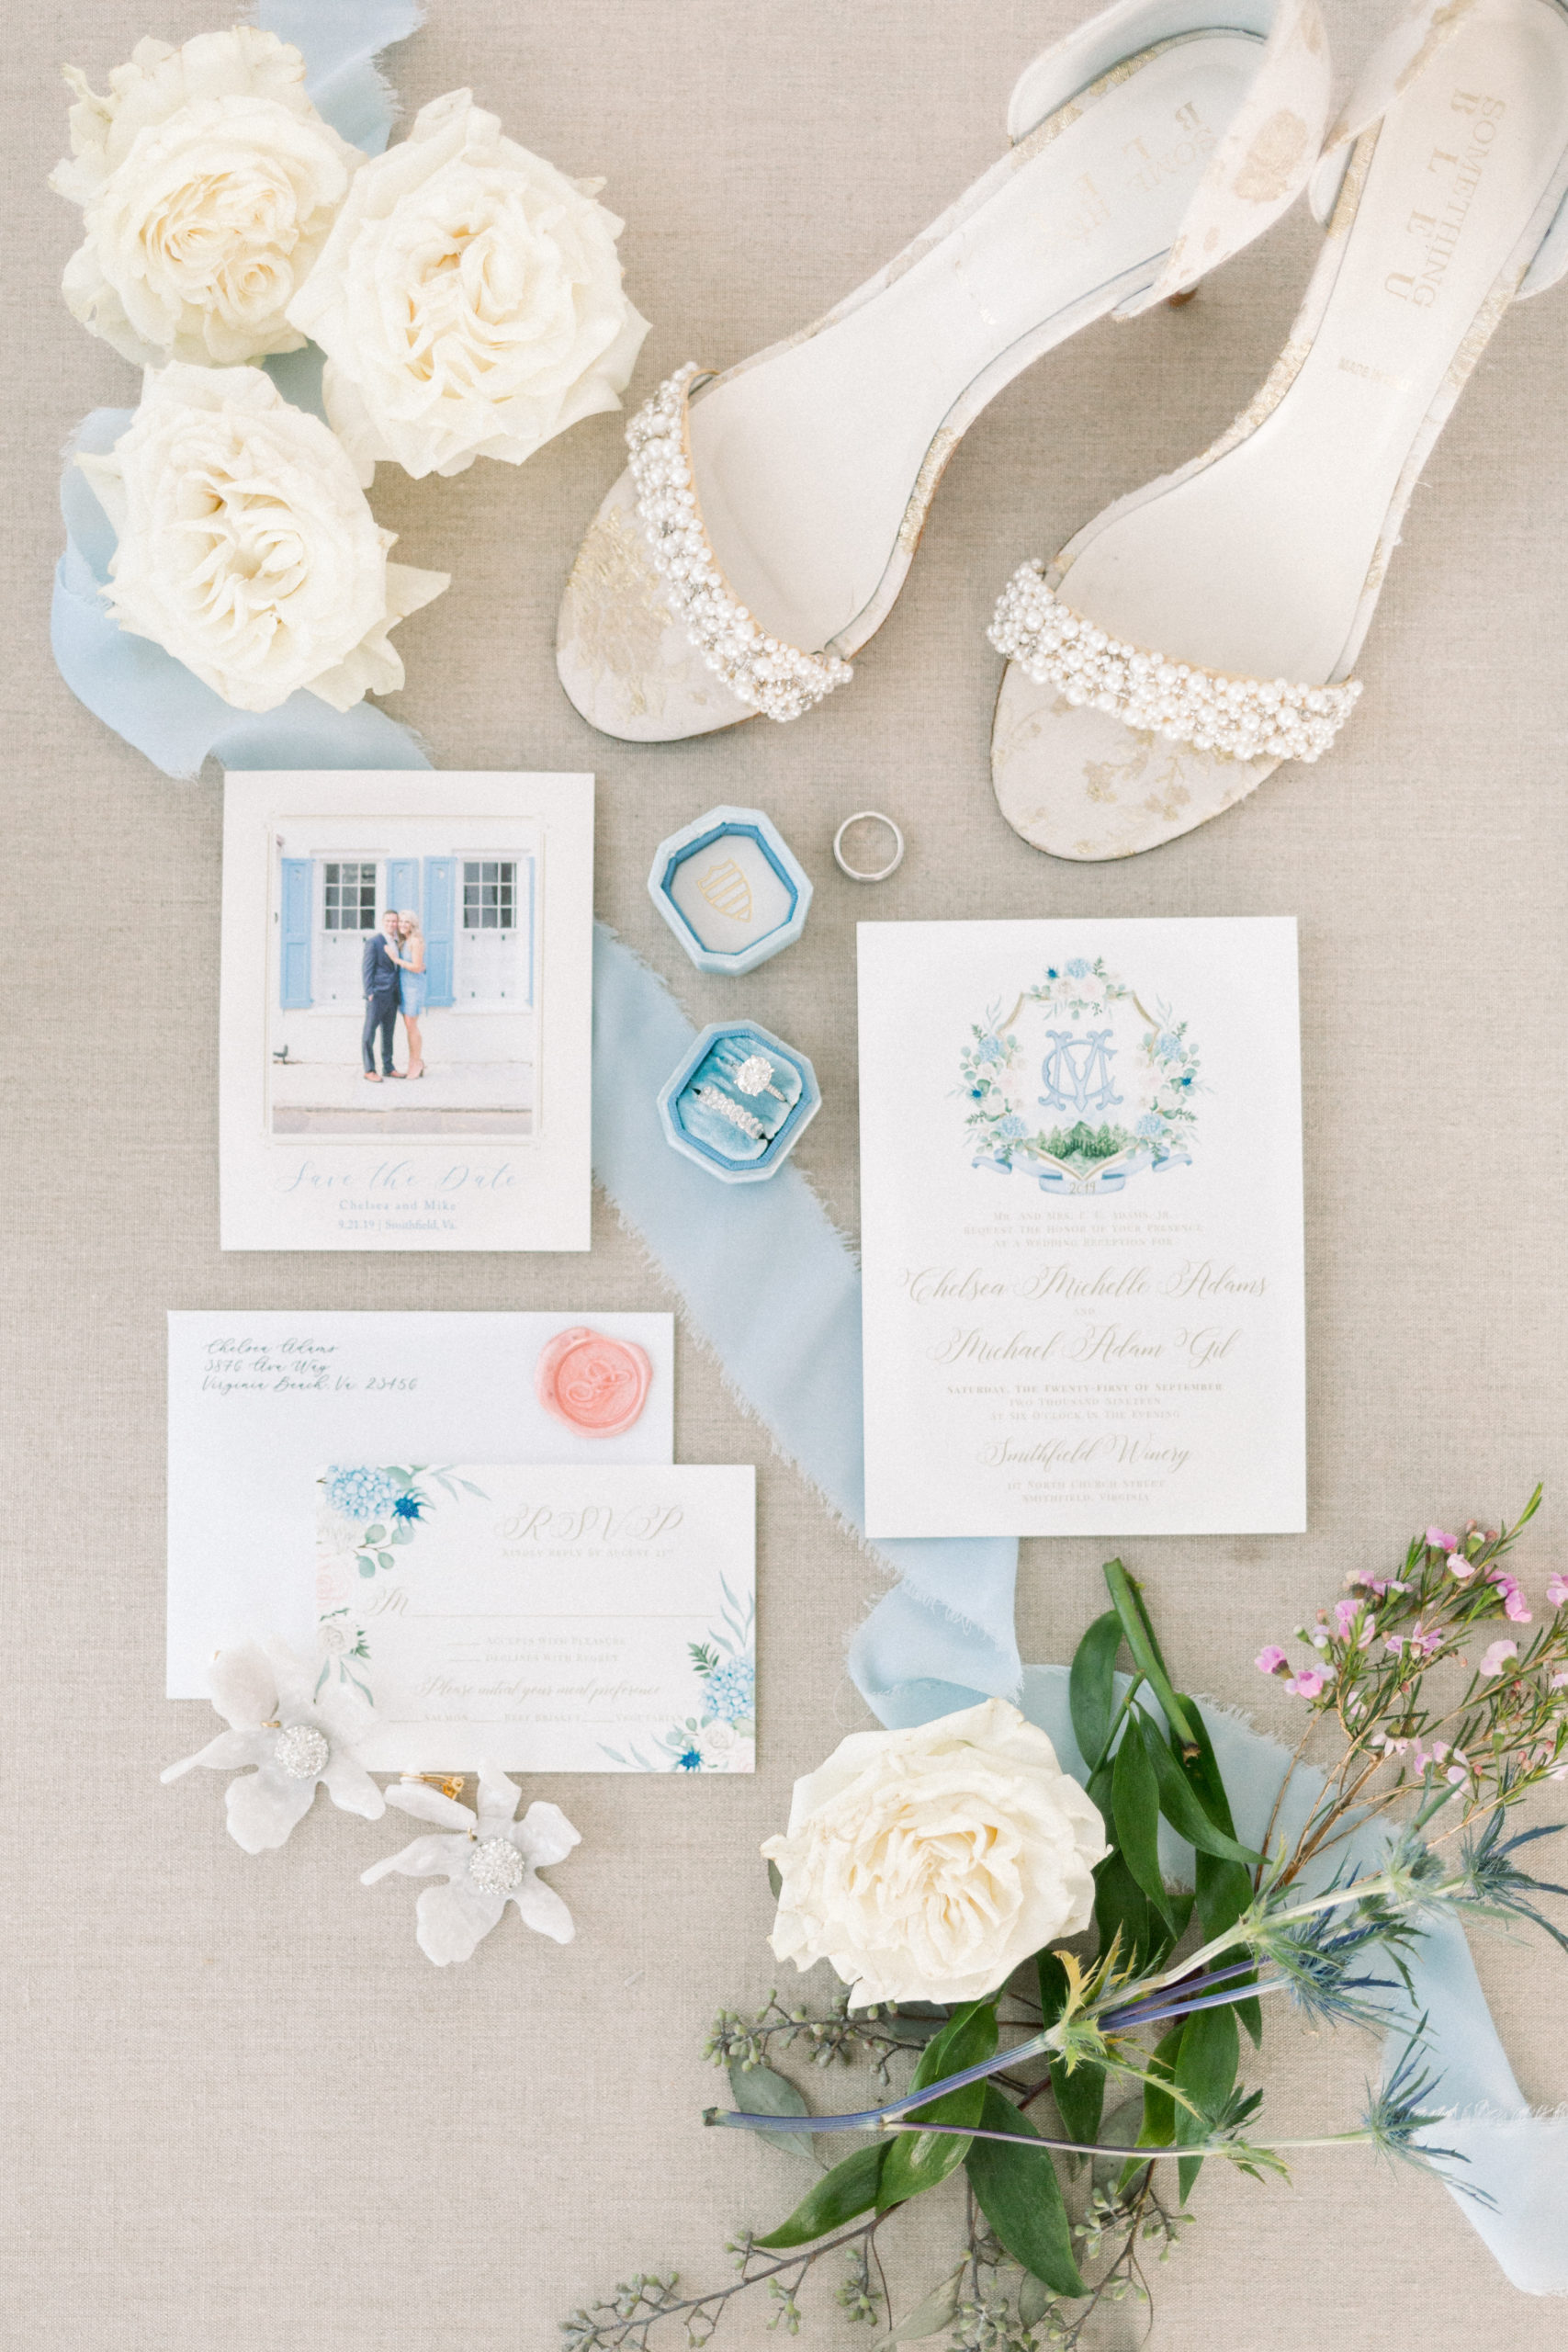 Minimalist Monogram Wedding Invitations by Basic Invite